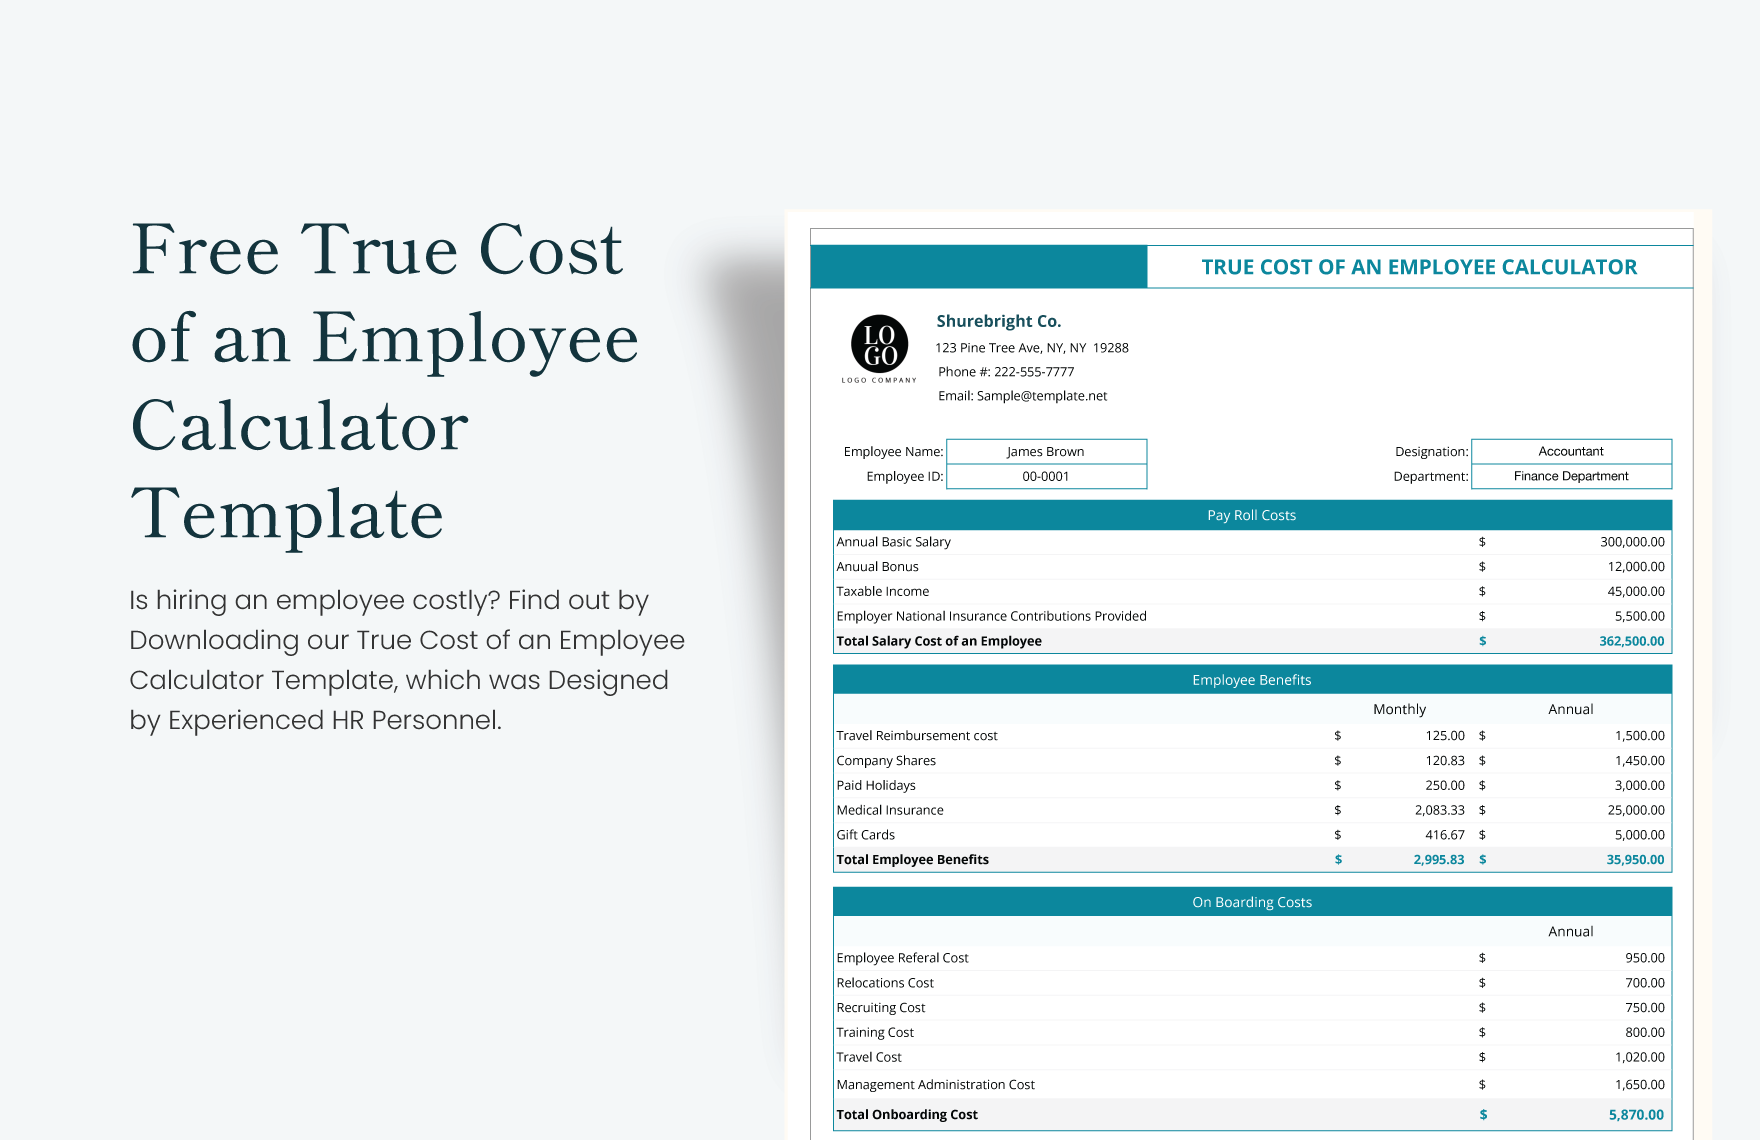 Free True Cost of an Employee Calculator Template